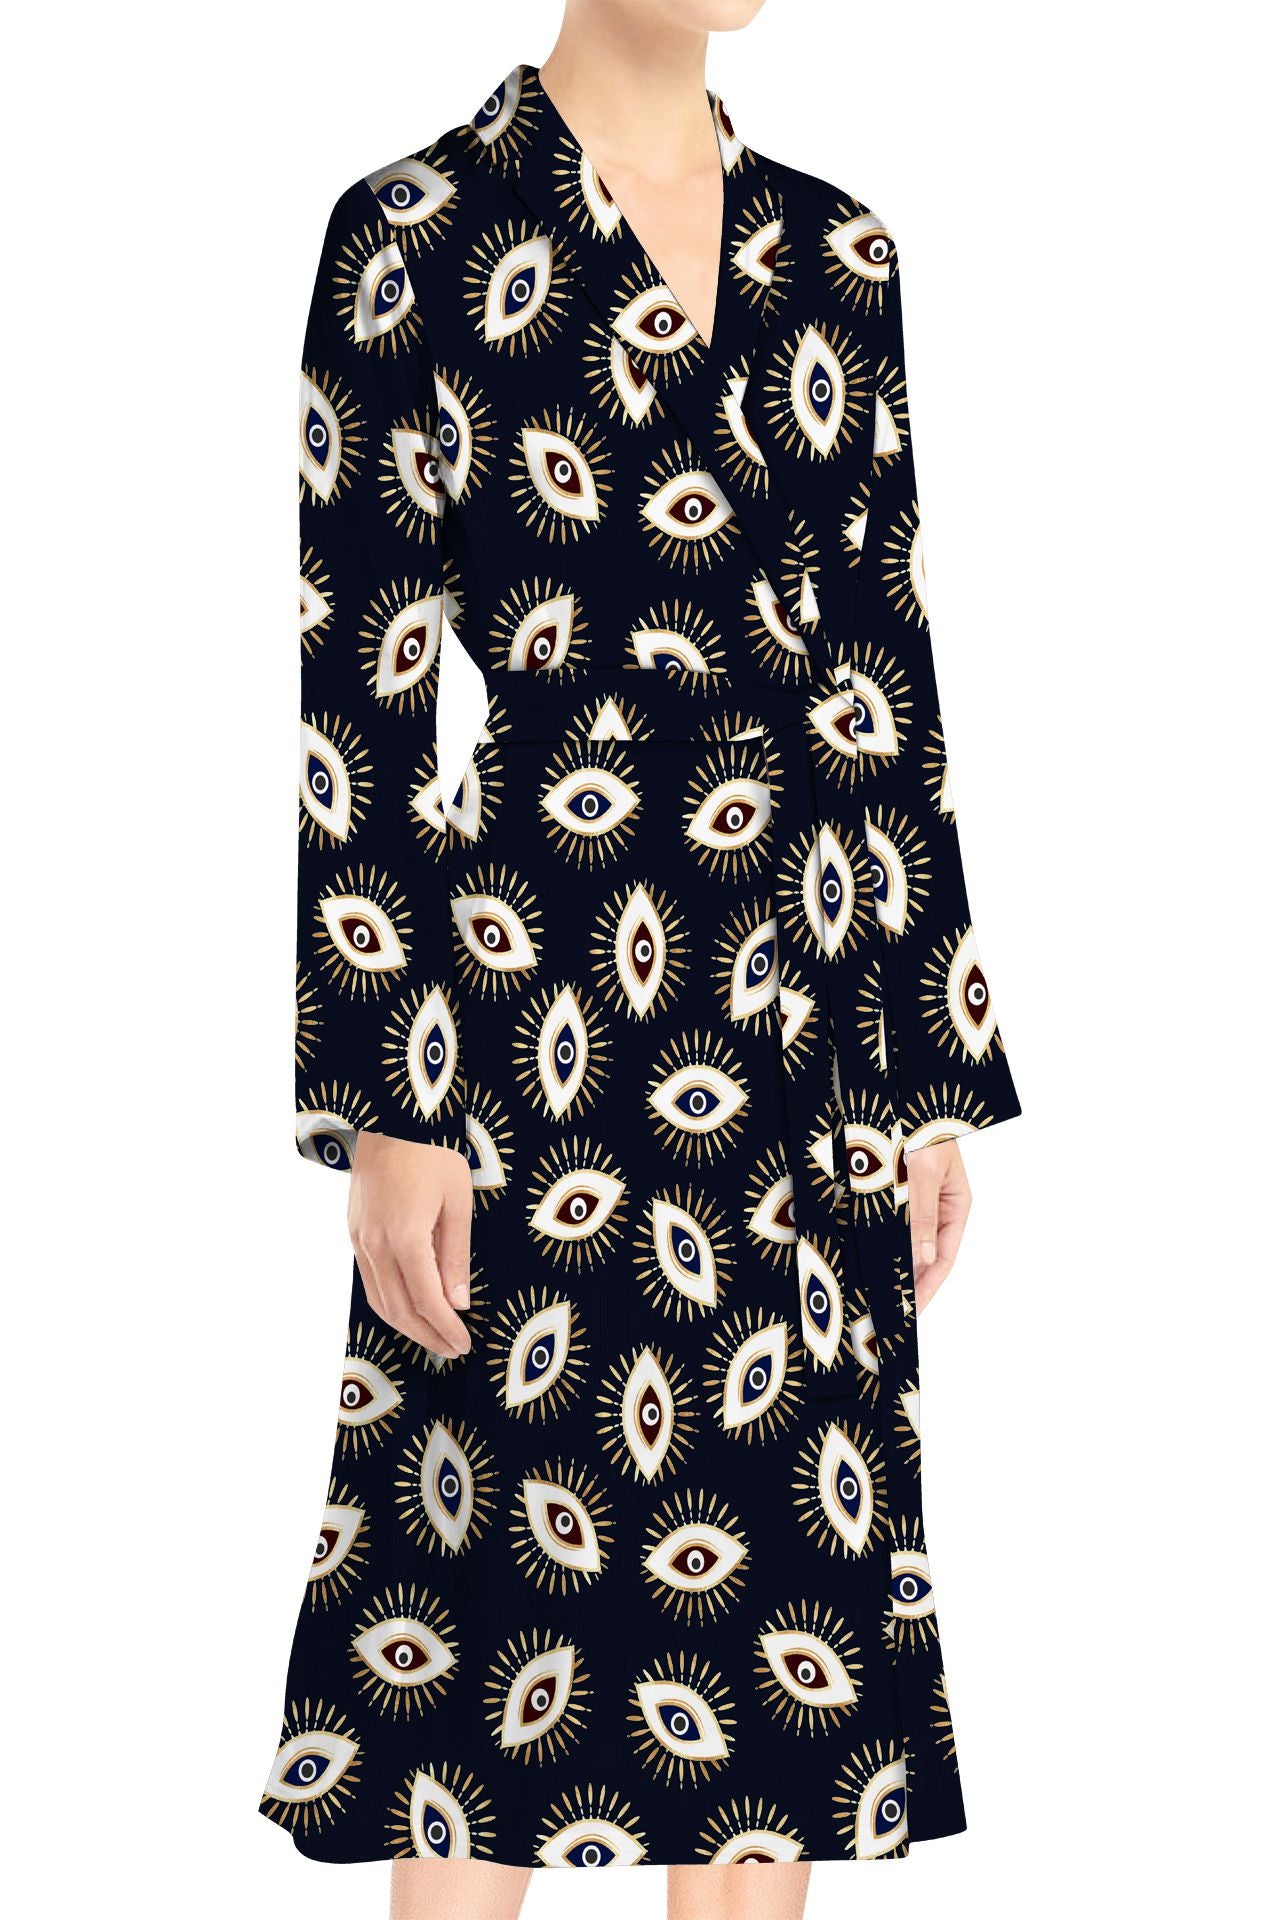 "printed wrap dress"  "Kyle X Shahida" "evil eye print" "wrap dresses for women"